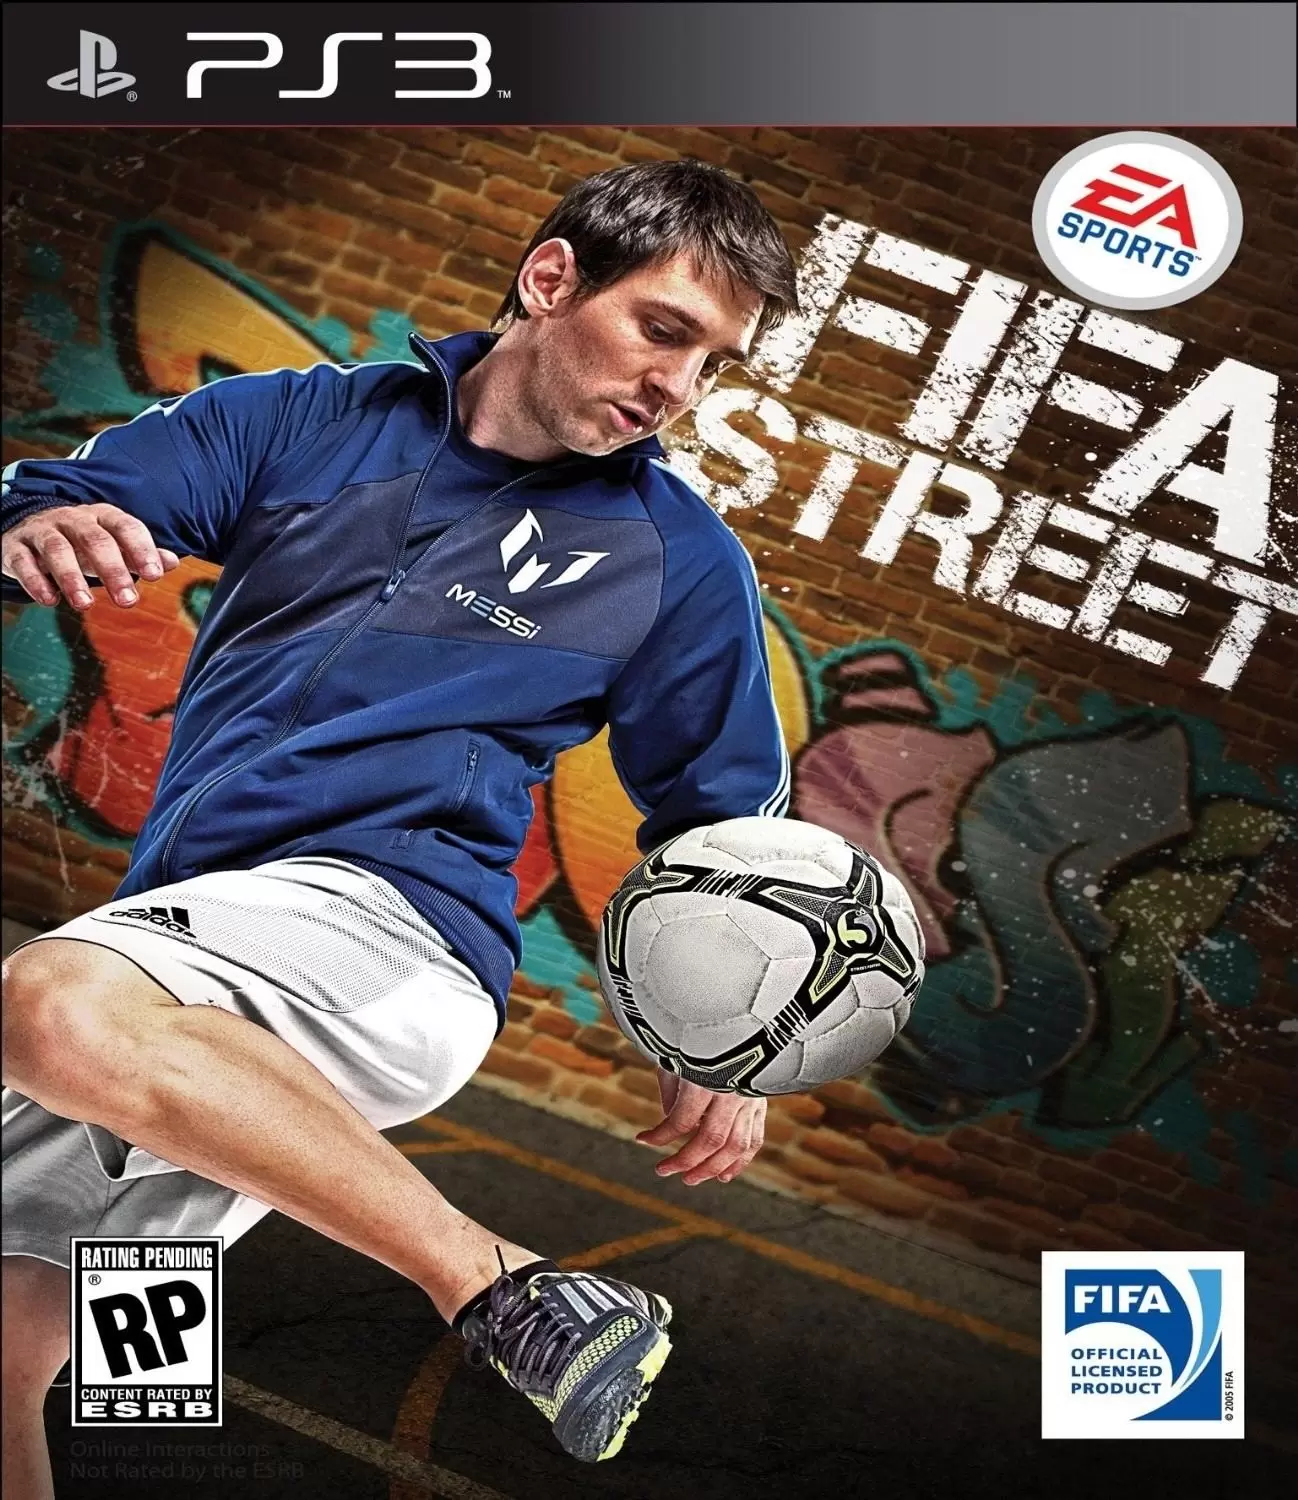 PS3 Games - FIFA Street